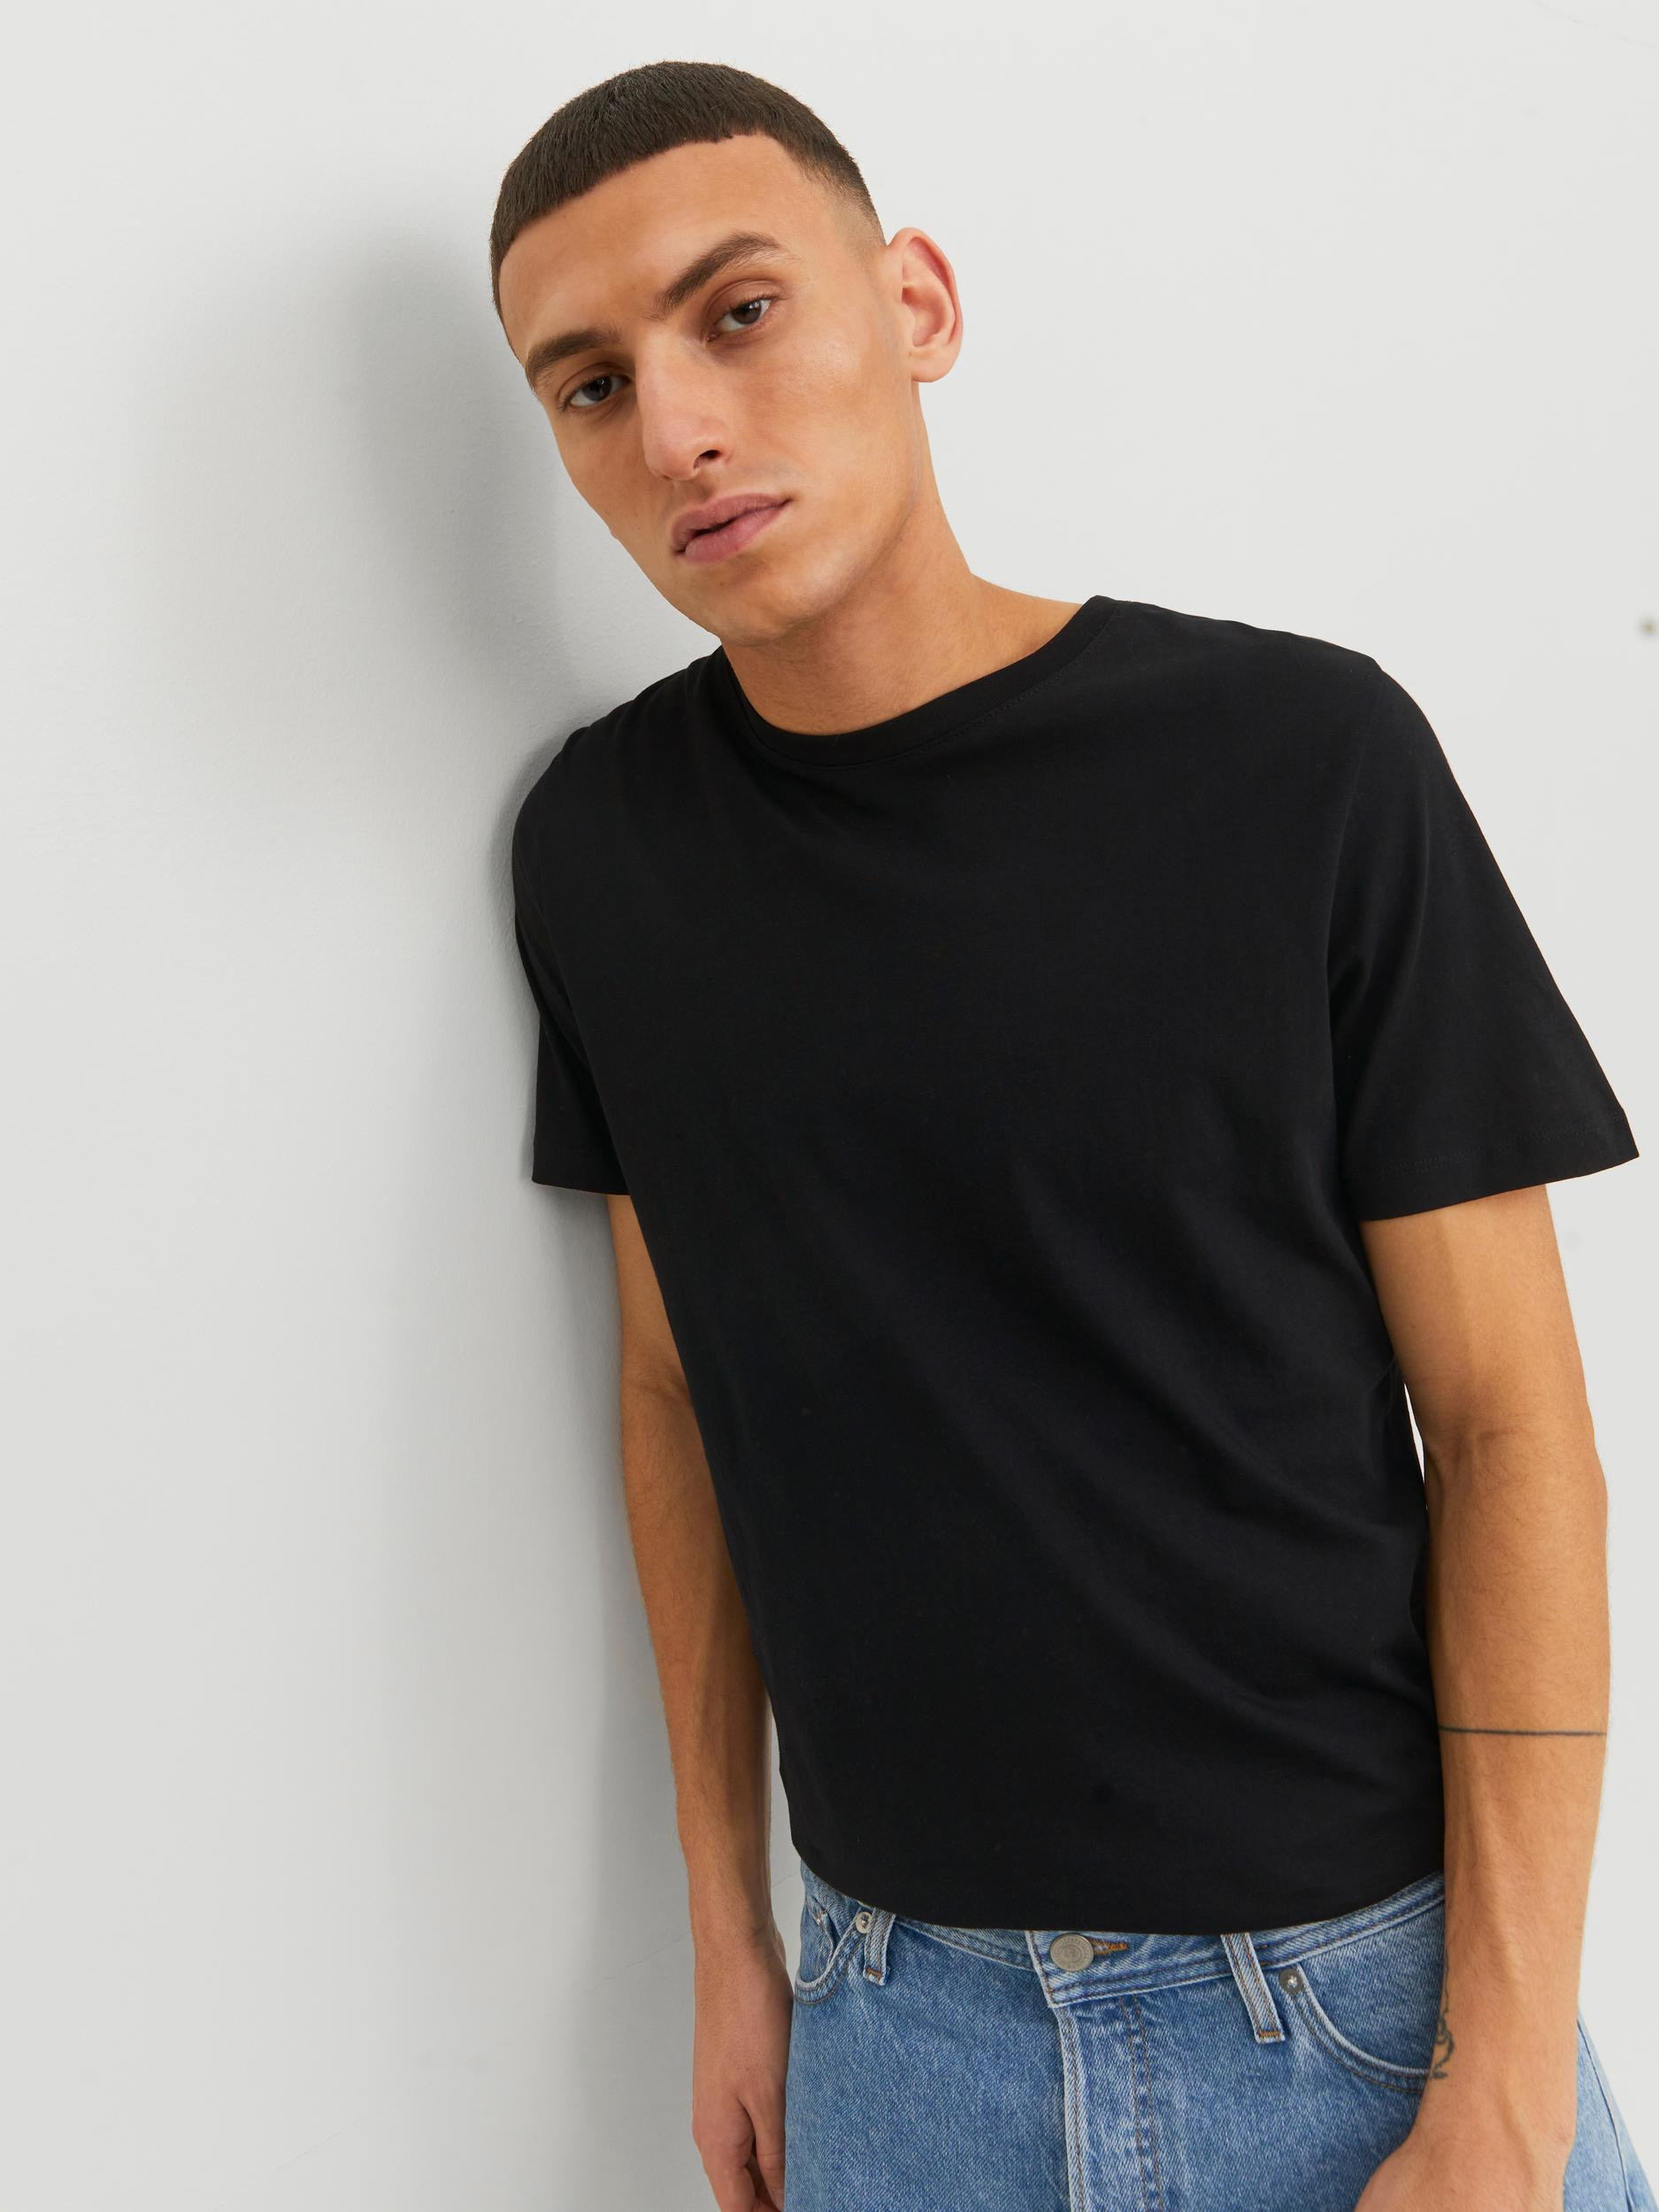 Jack & Jones - Cotton T-shirt, Black, large image number 4